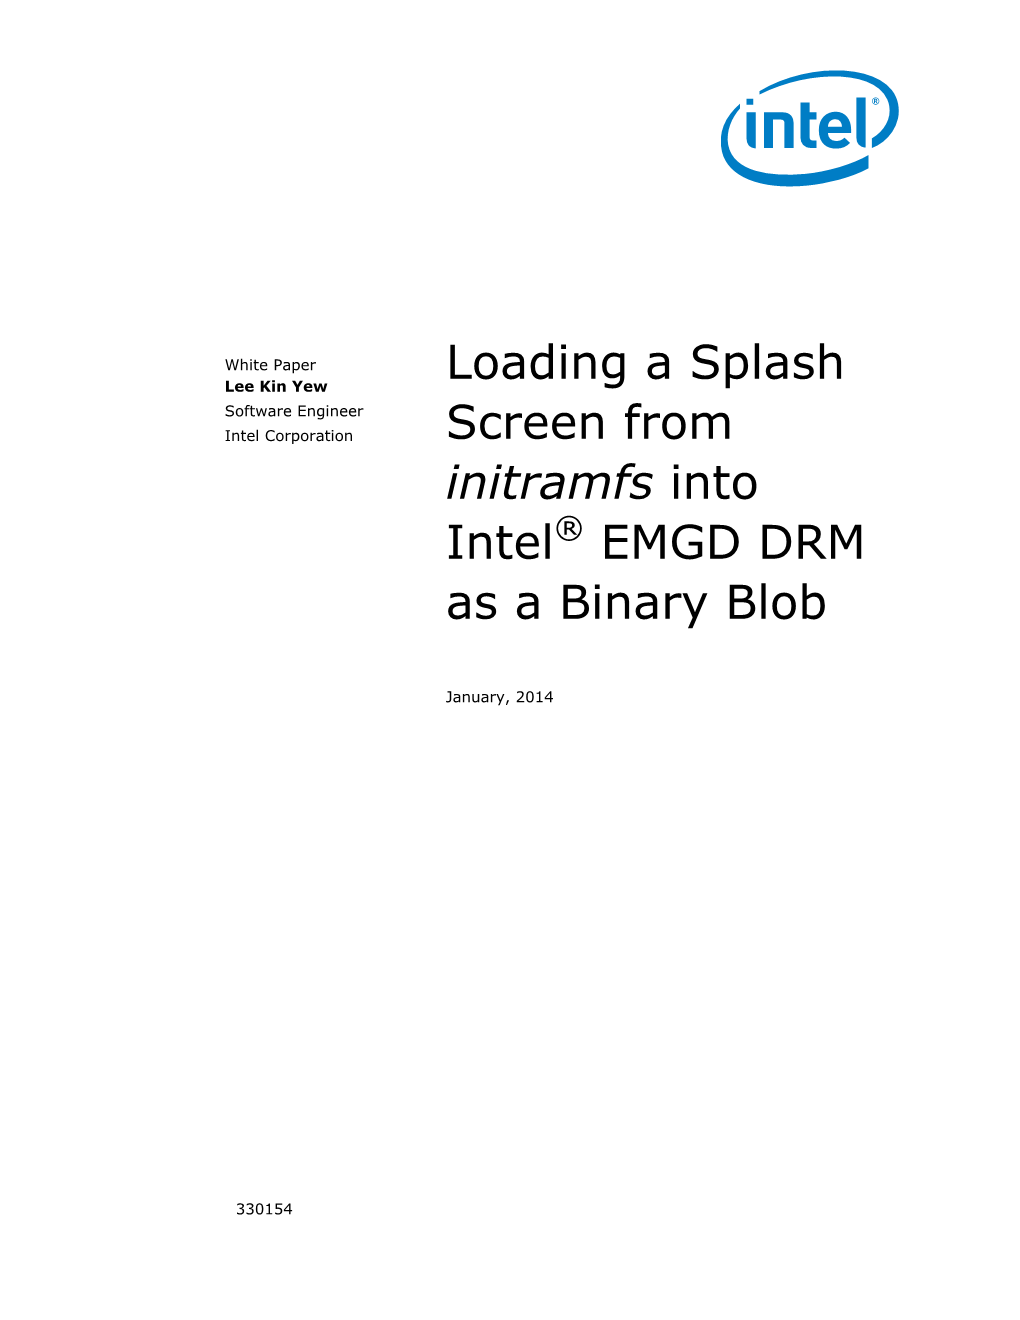 Loading a Splash Screen from Initramfs Into Intel® EMGD DRM As a Binary Blob